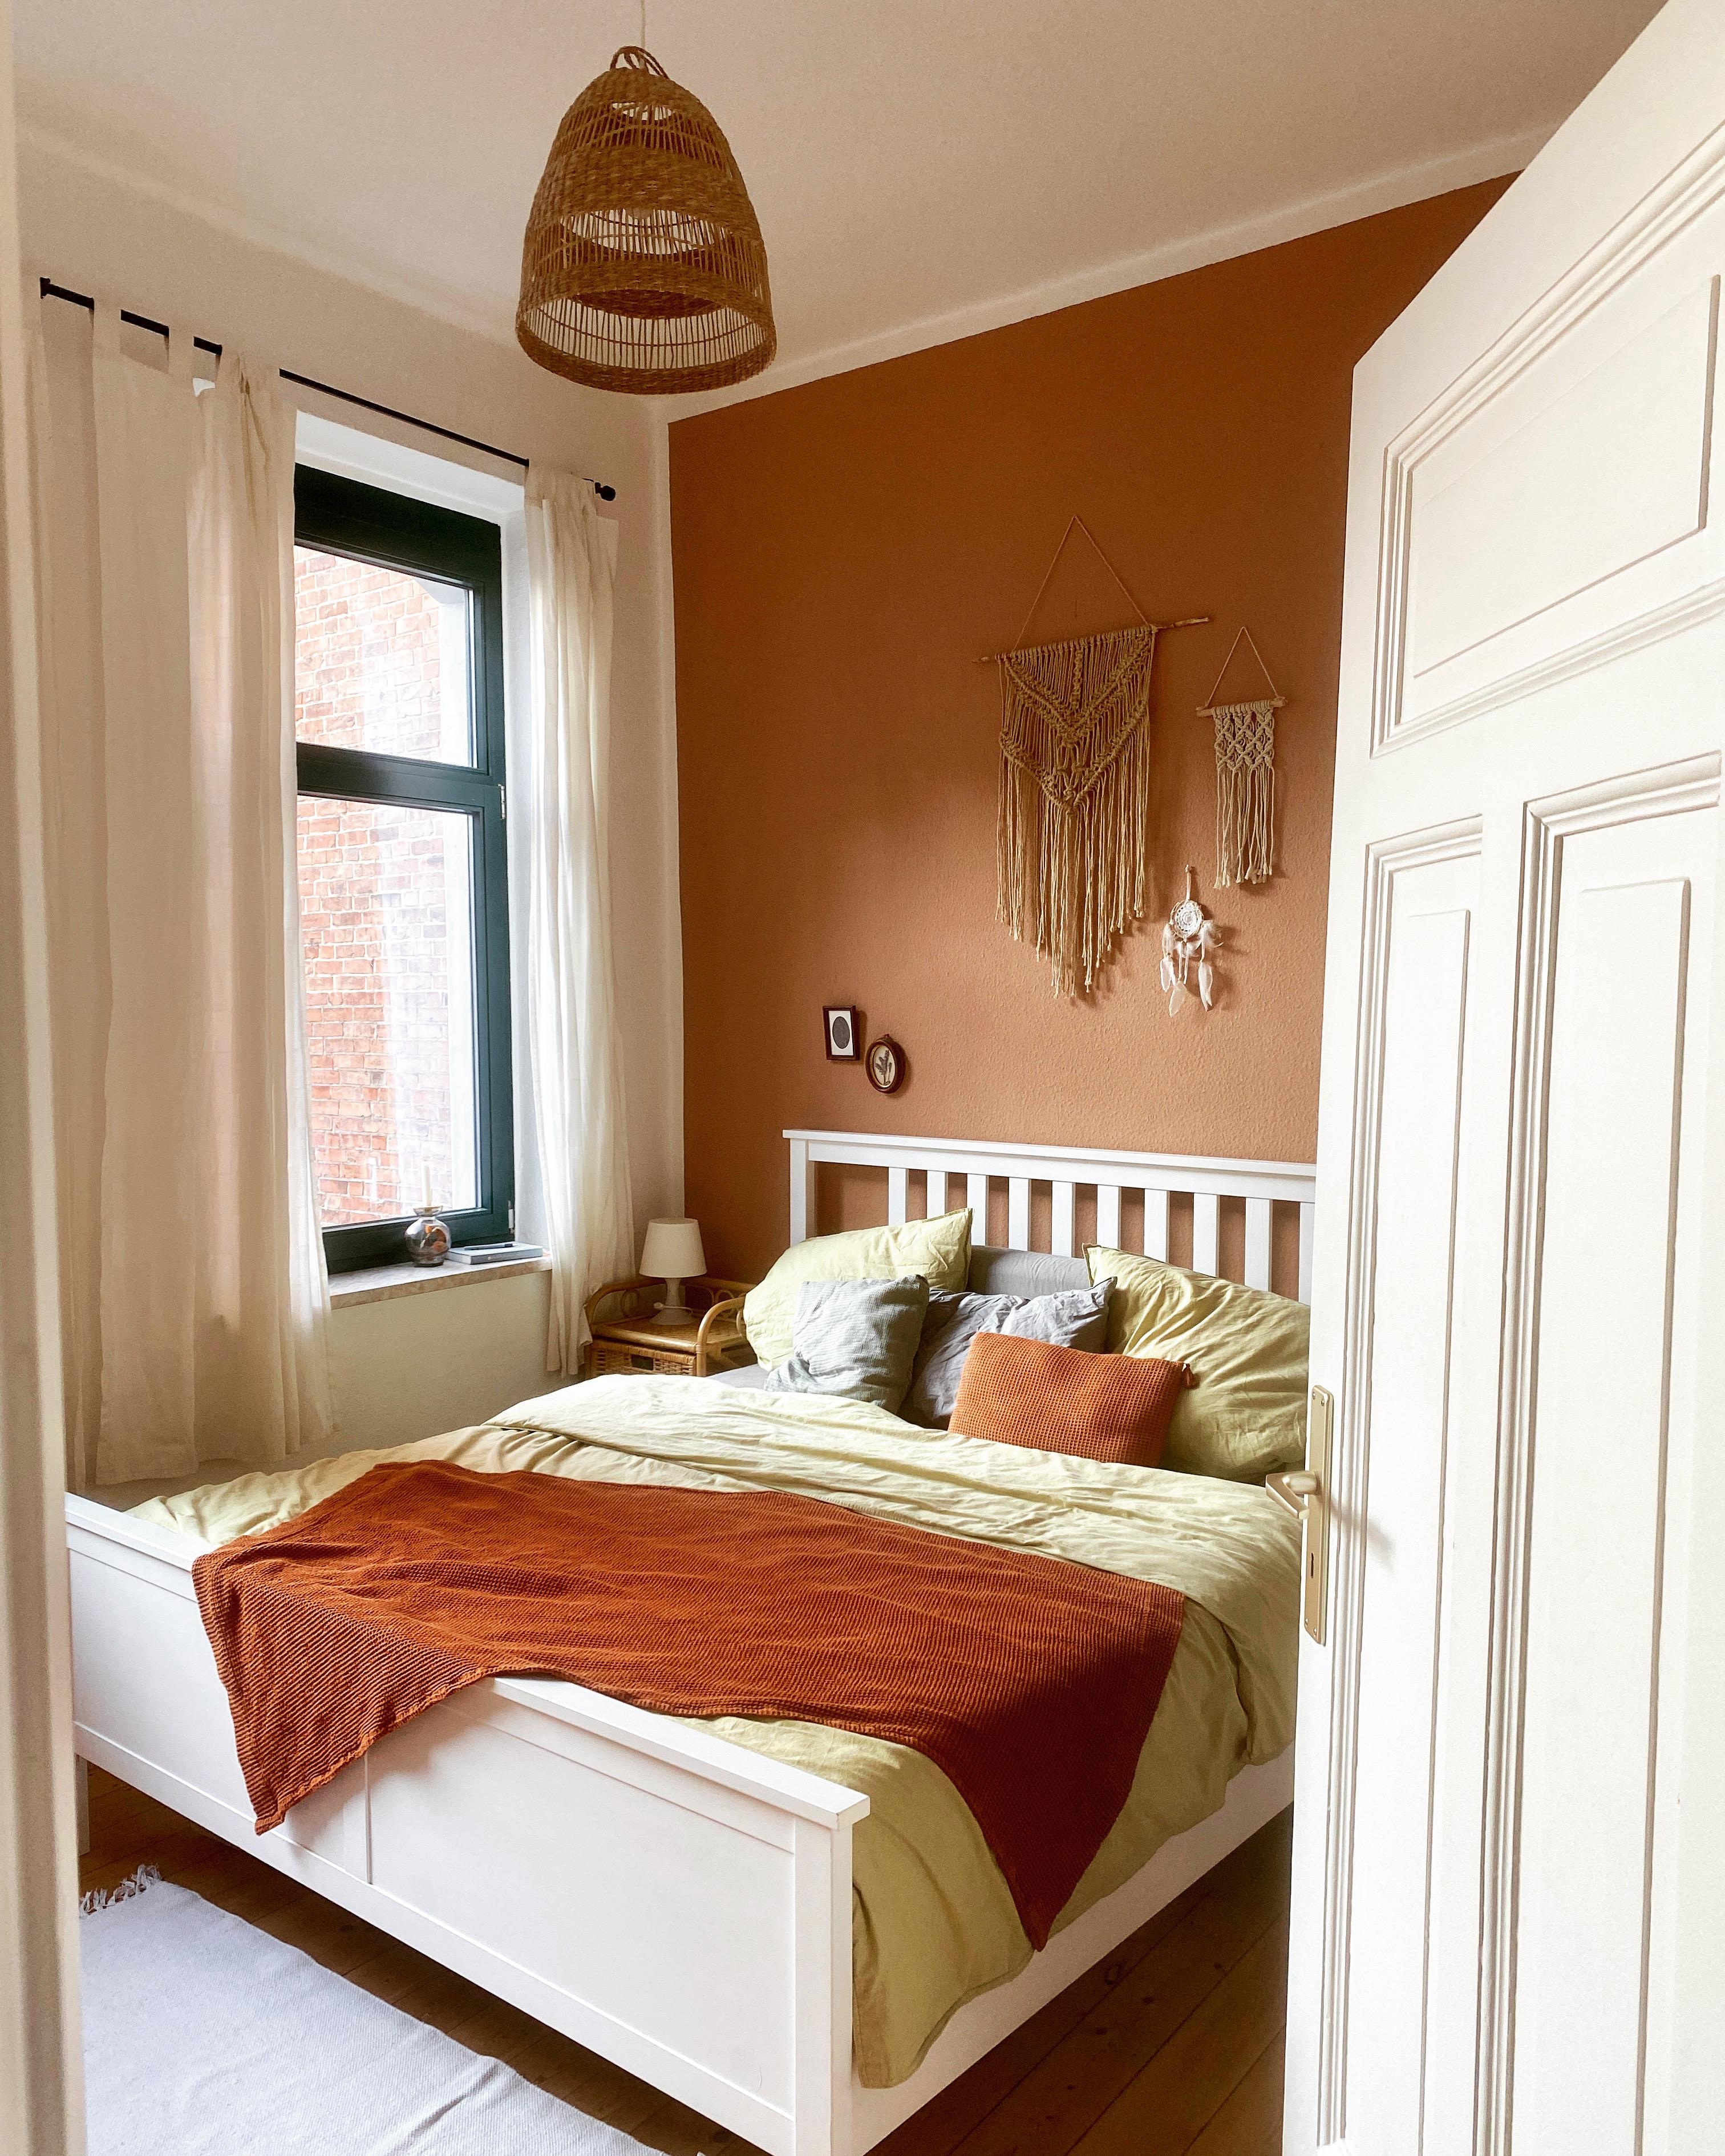 Blick ins Schlafzimmer 
#schlafzimmer #bett #ikea #boho #makramee #wandfarbe #farbe #altbauwohnung #dielenboden 